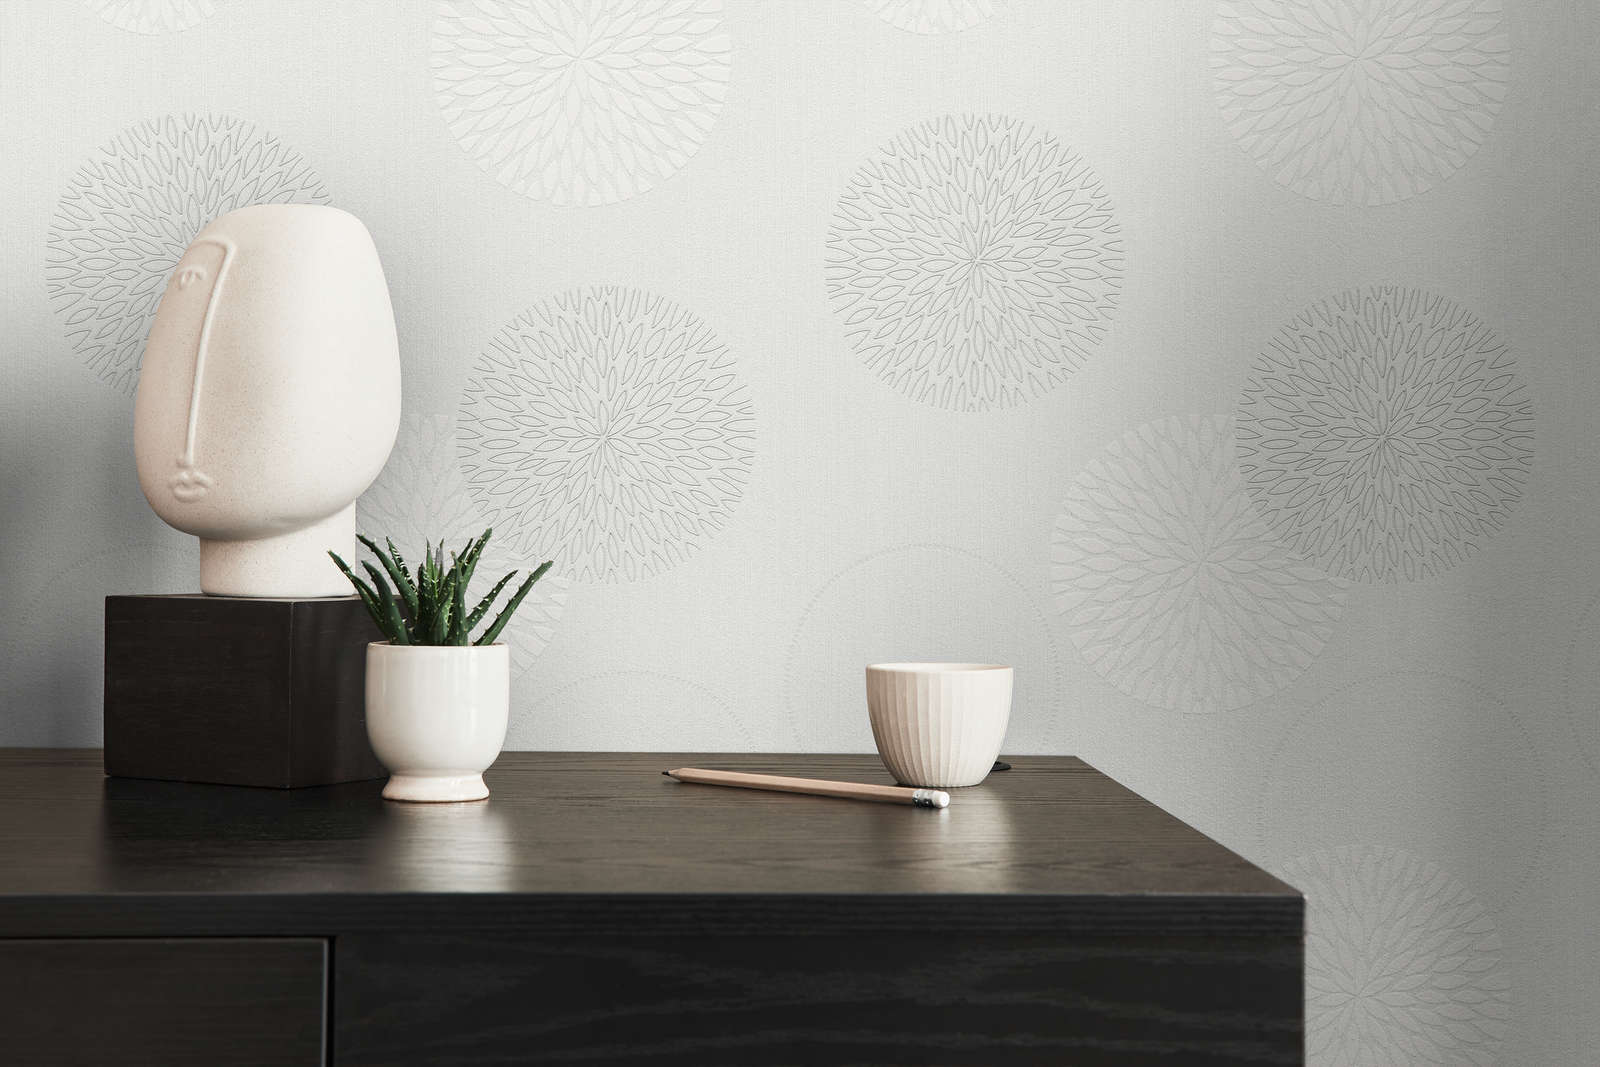             Non-woven wallpaper flowers in abstract design - cream, white
        